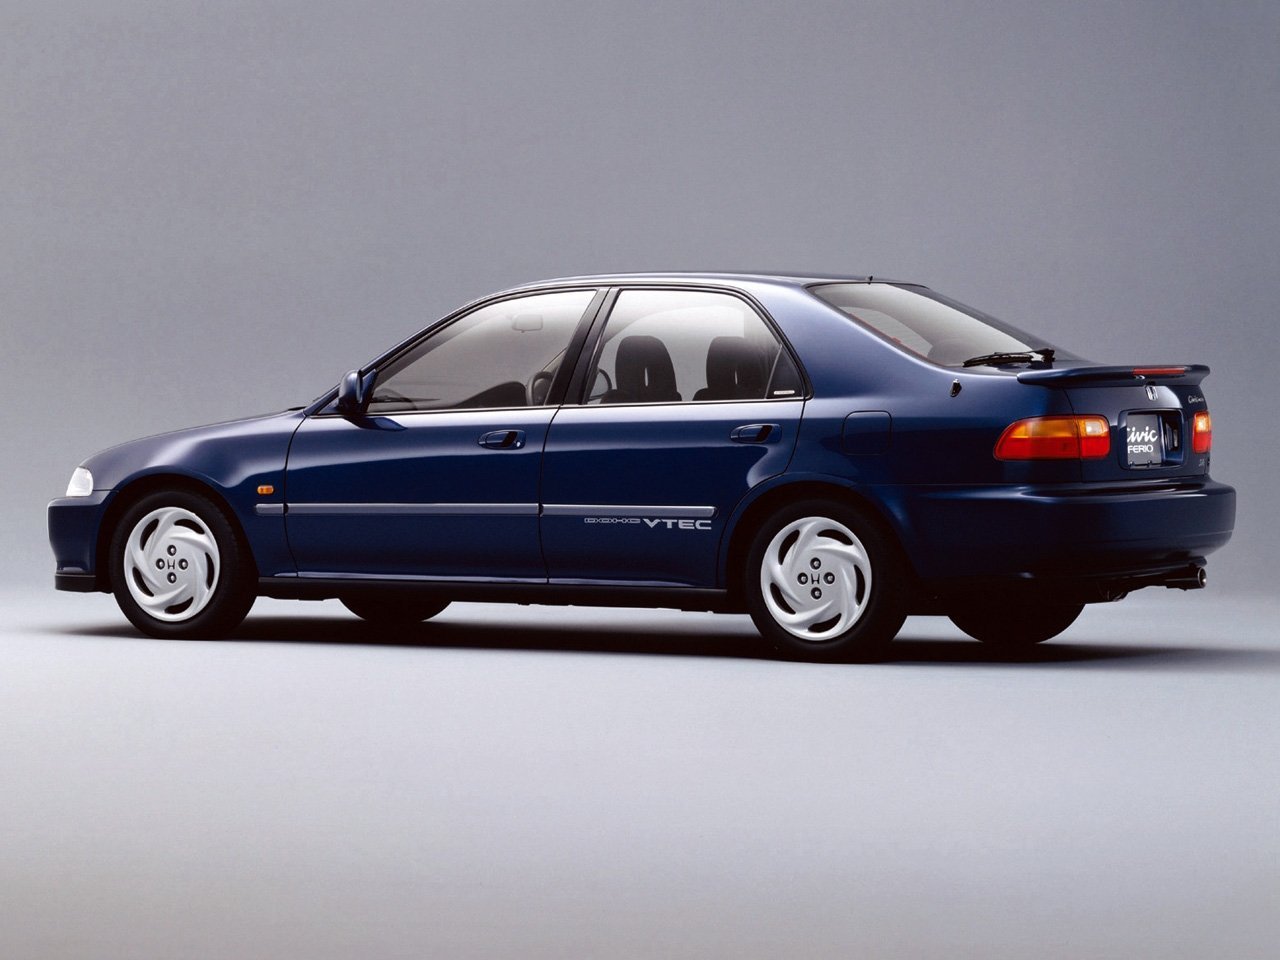 седан Honda Civic Ferio 1991 - 1995г выпуска модификация 1.3 AT (85 л.с.)